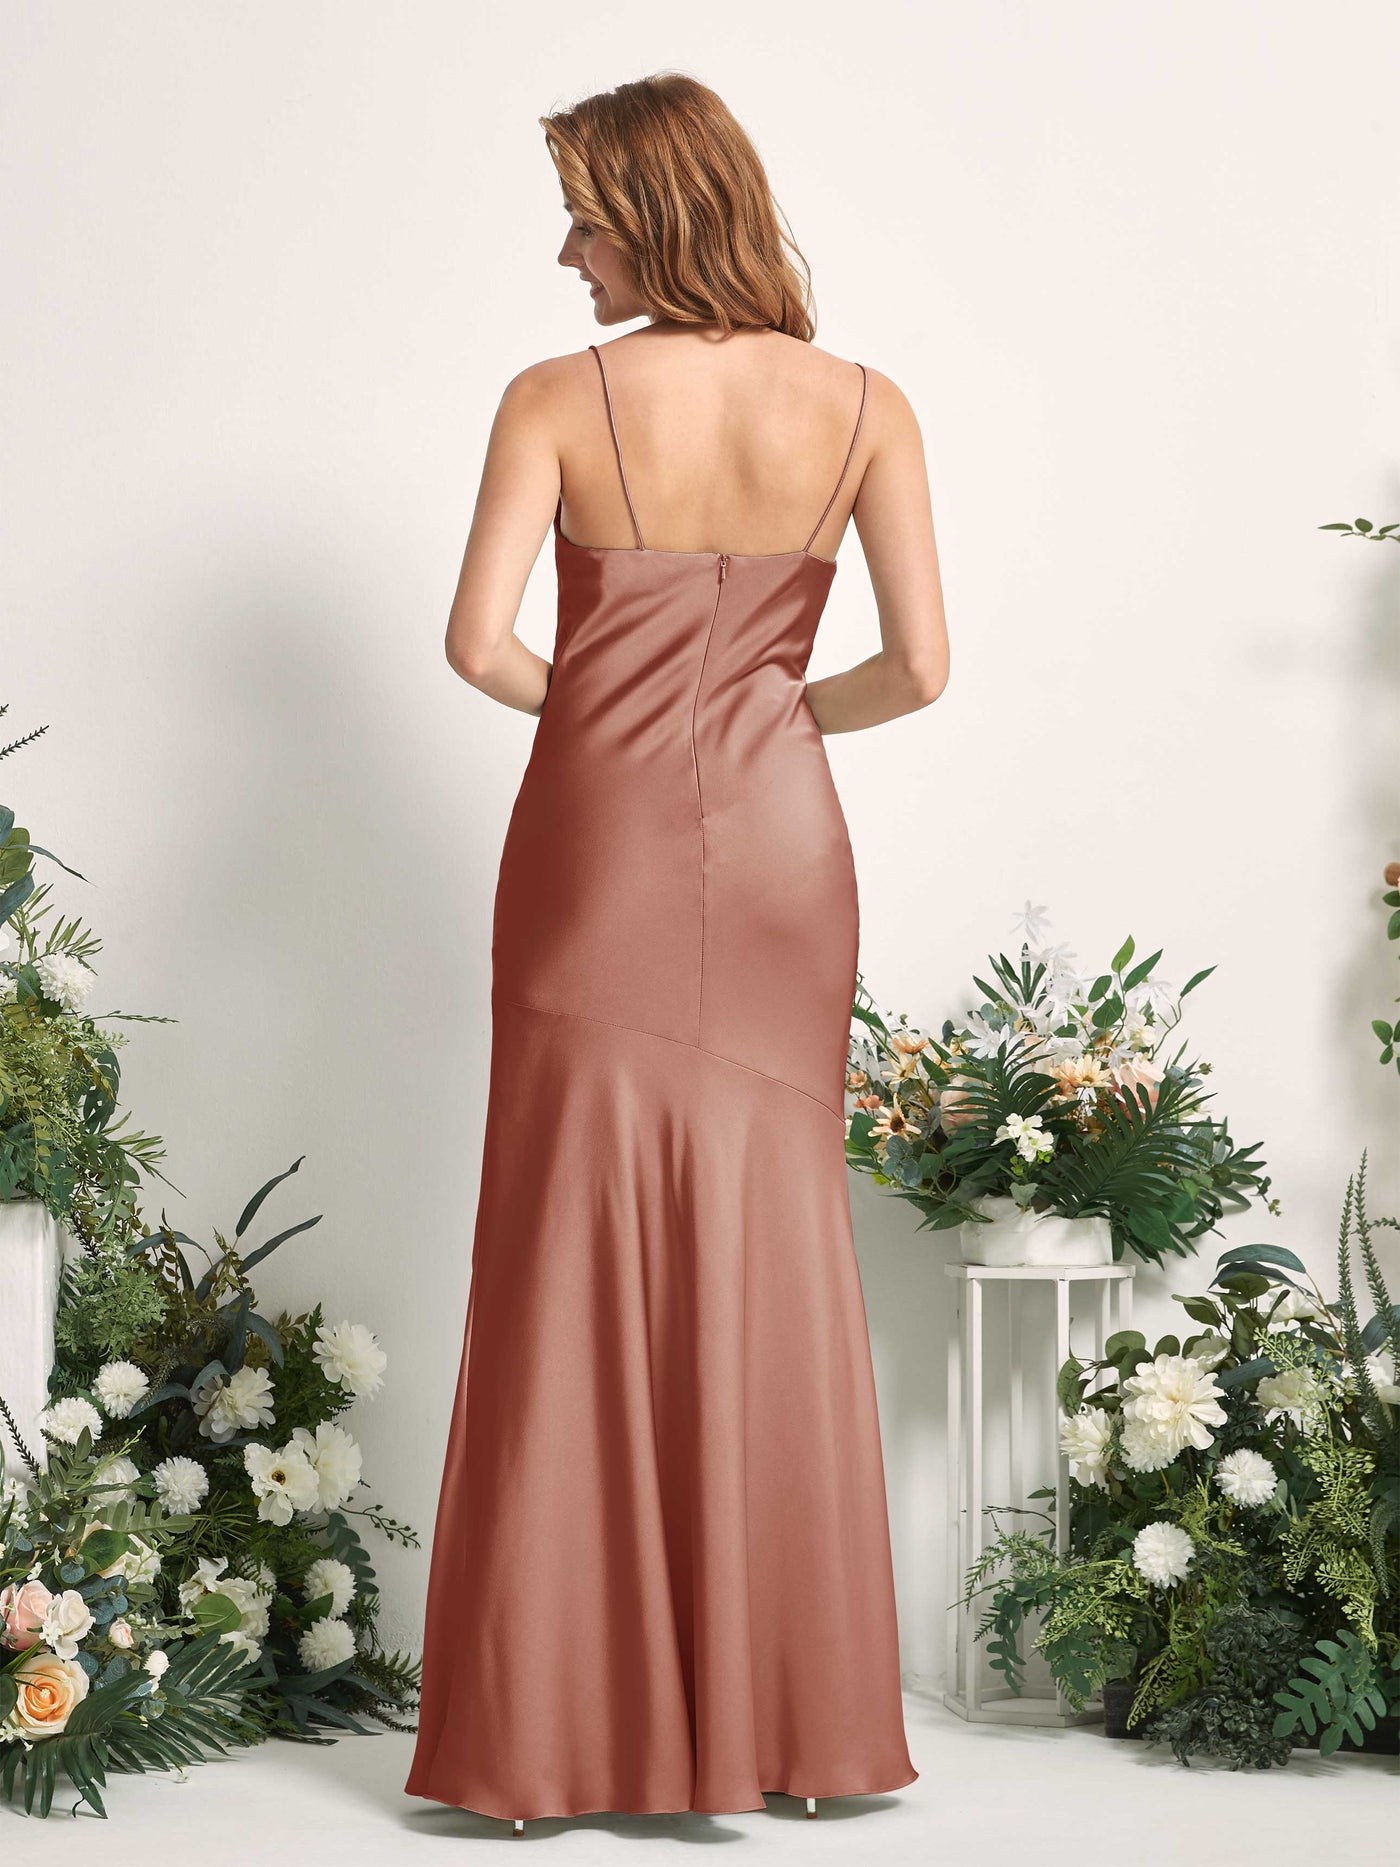 Raw Sienna Bridesmaid Dresses Bridesmaid Dress Mermaid/Trumpet Satin Spaghetti-straps Full Length Sleeveless Wedding Party Dress (80225615)#color_raw-sienna